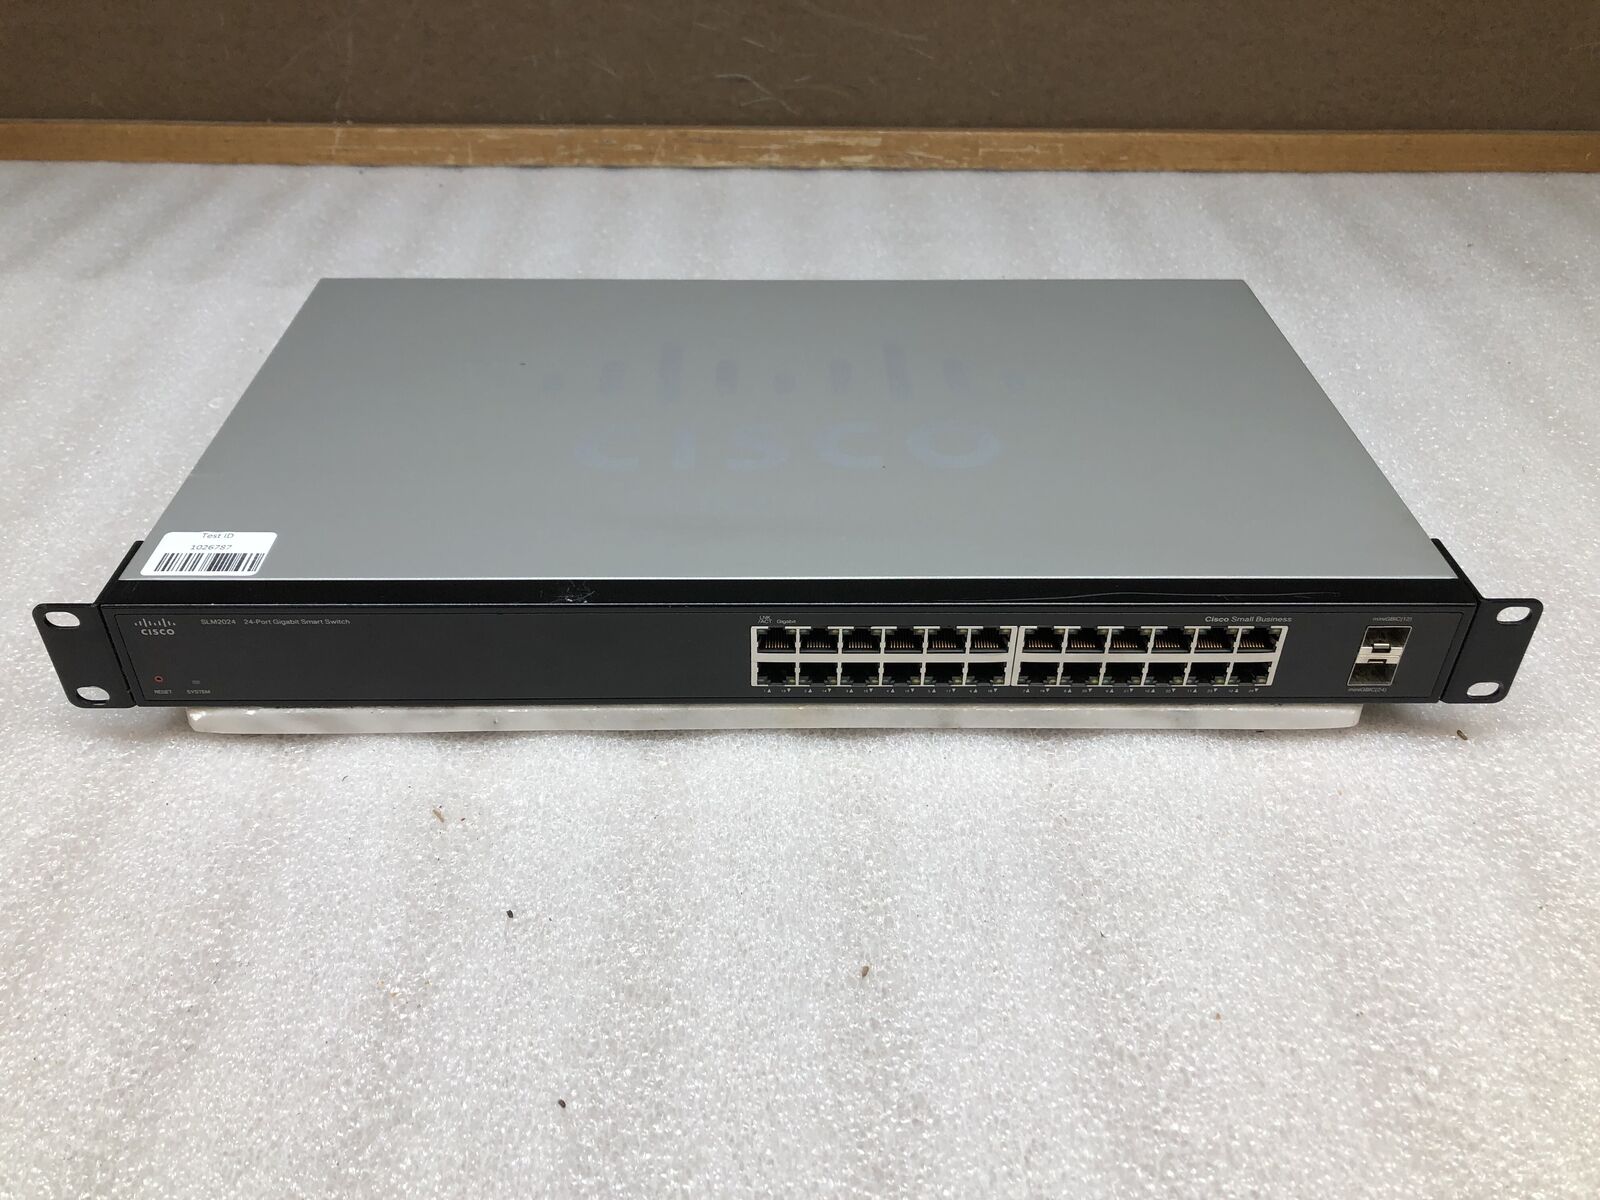 Cisco Small Business SLM2024 24-Port Gigabit Smart Ethernet Switch -TESTED/RESET